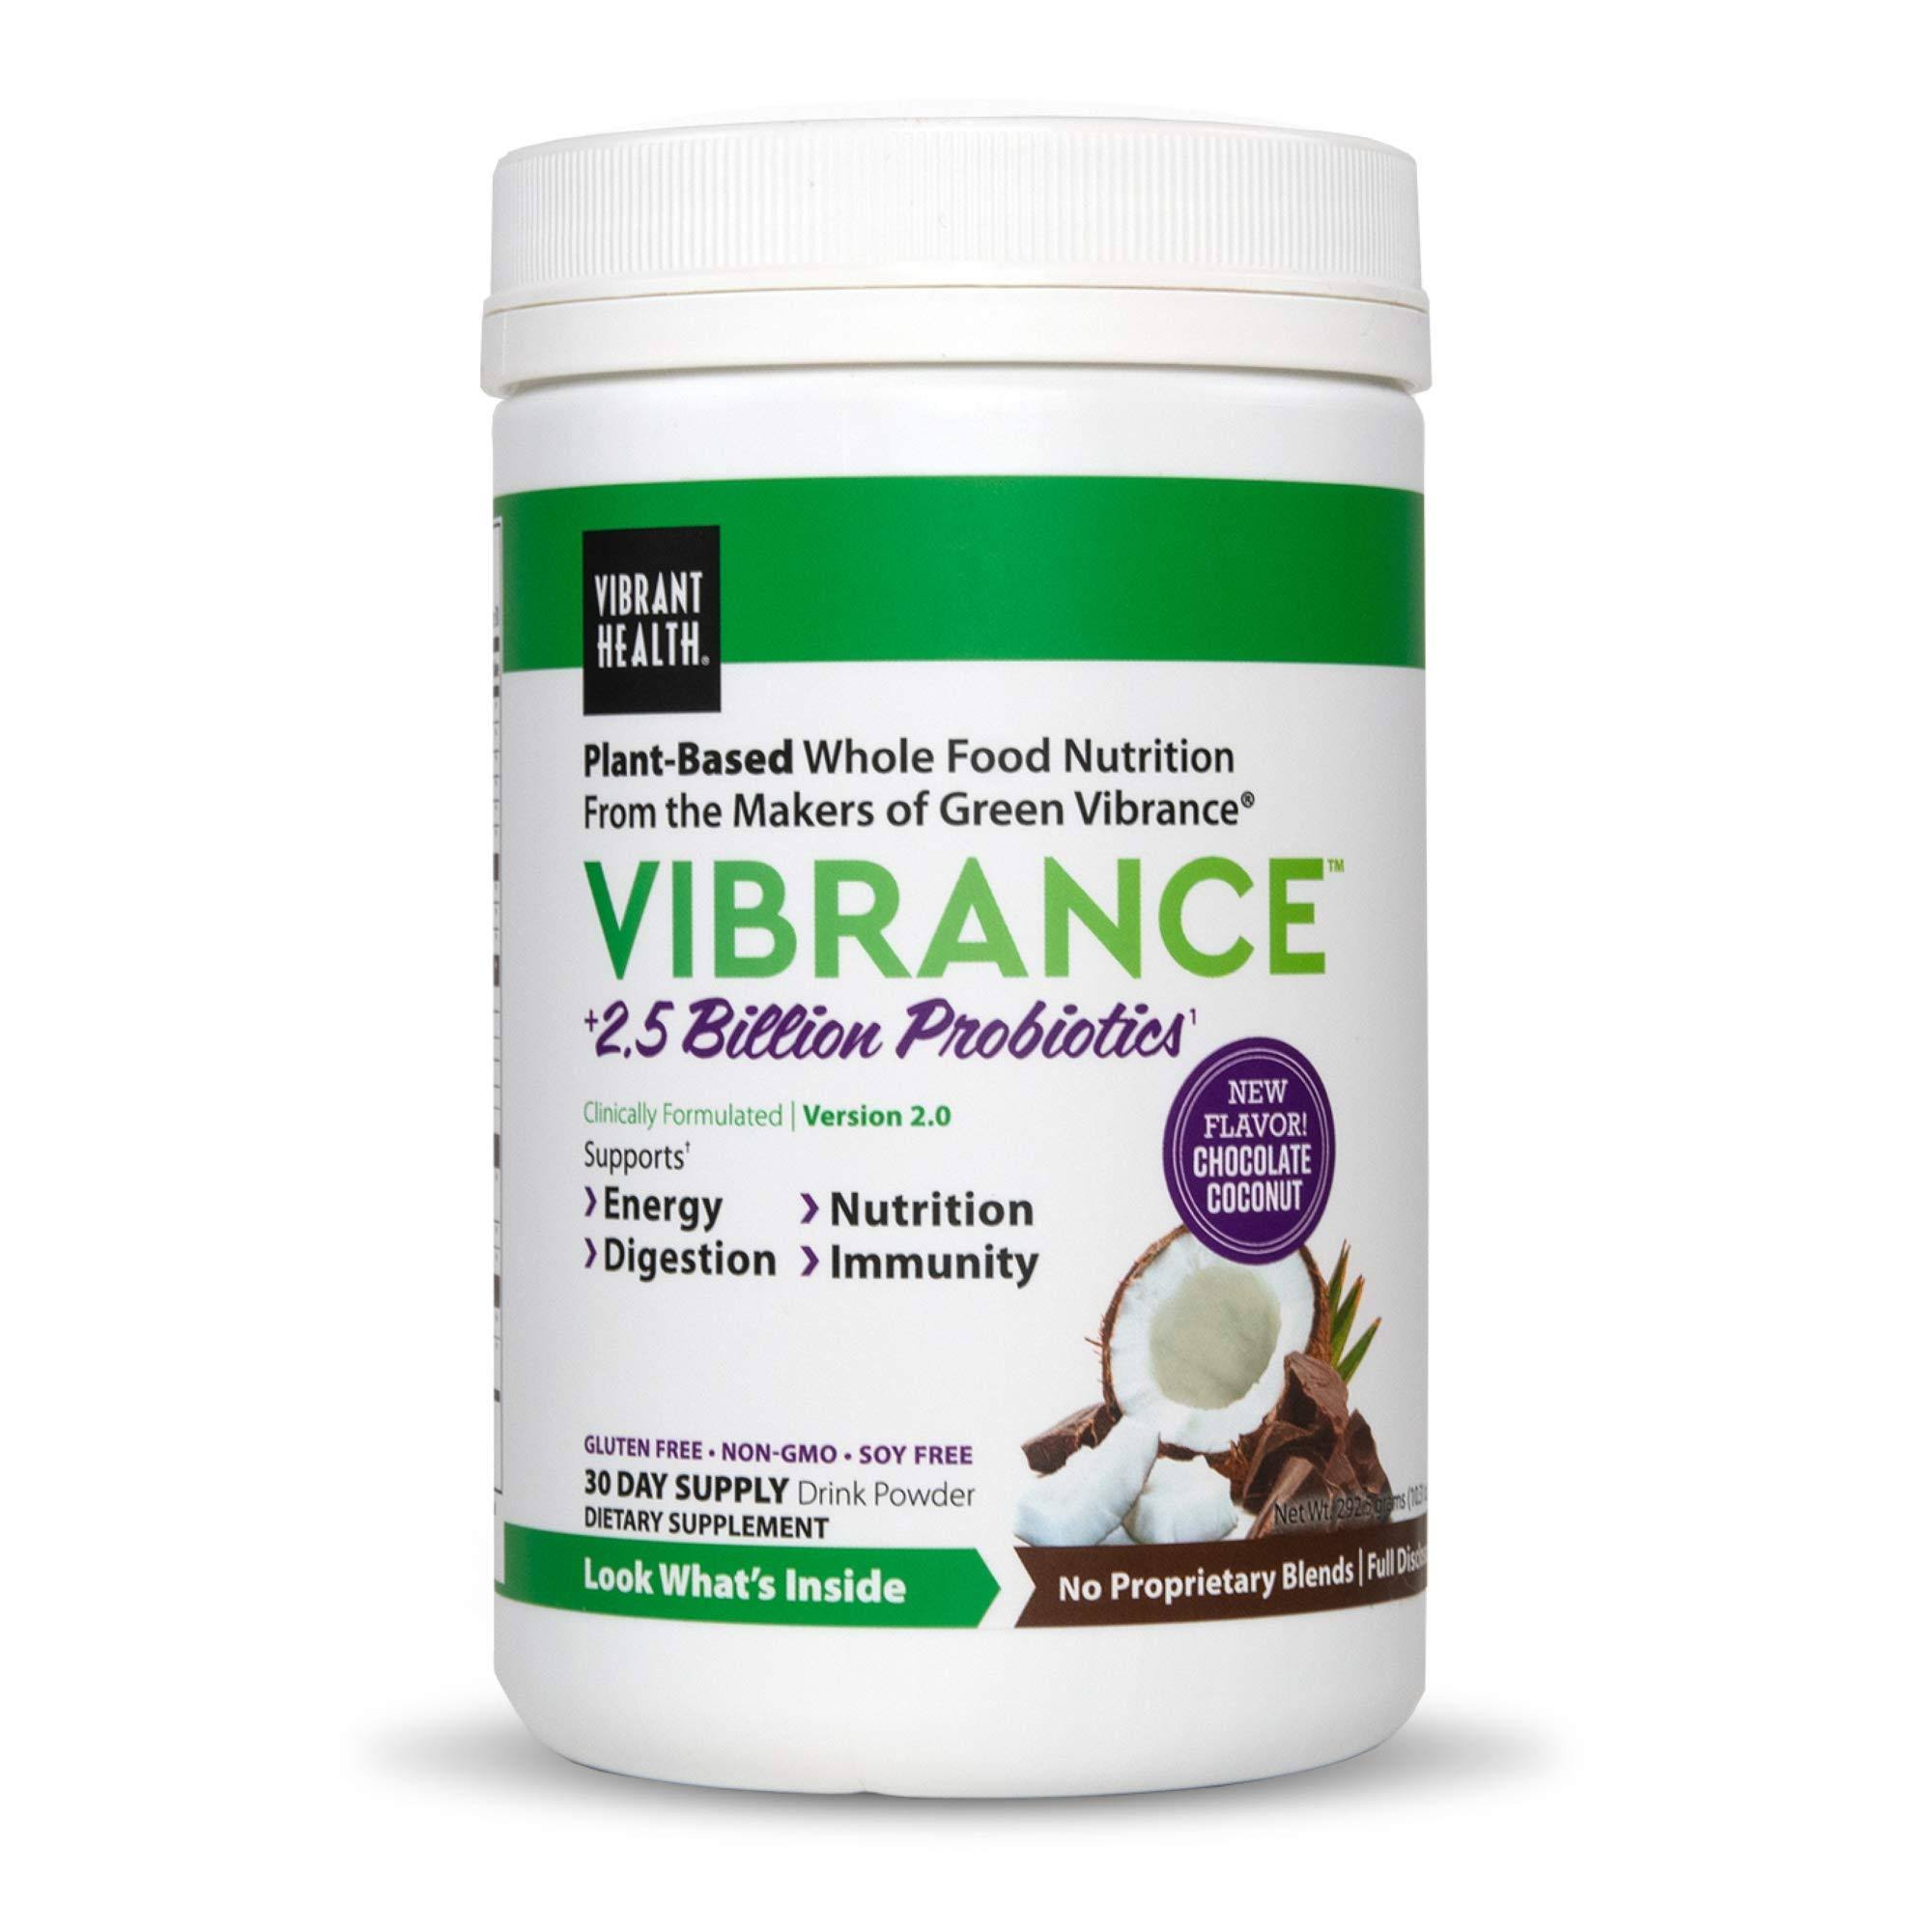 Vibrant Health Vibrance Drink Powder Dietary Supplement - Chocolate Coconut